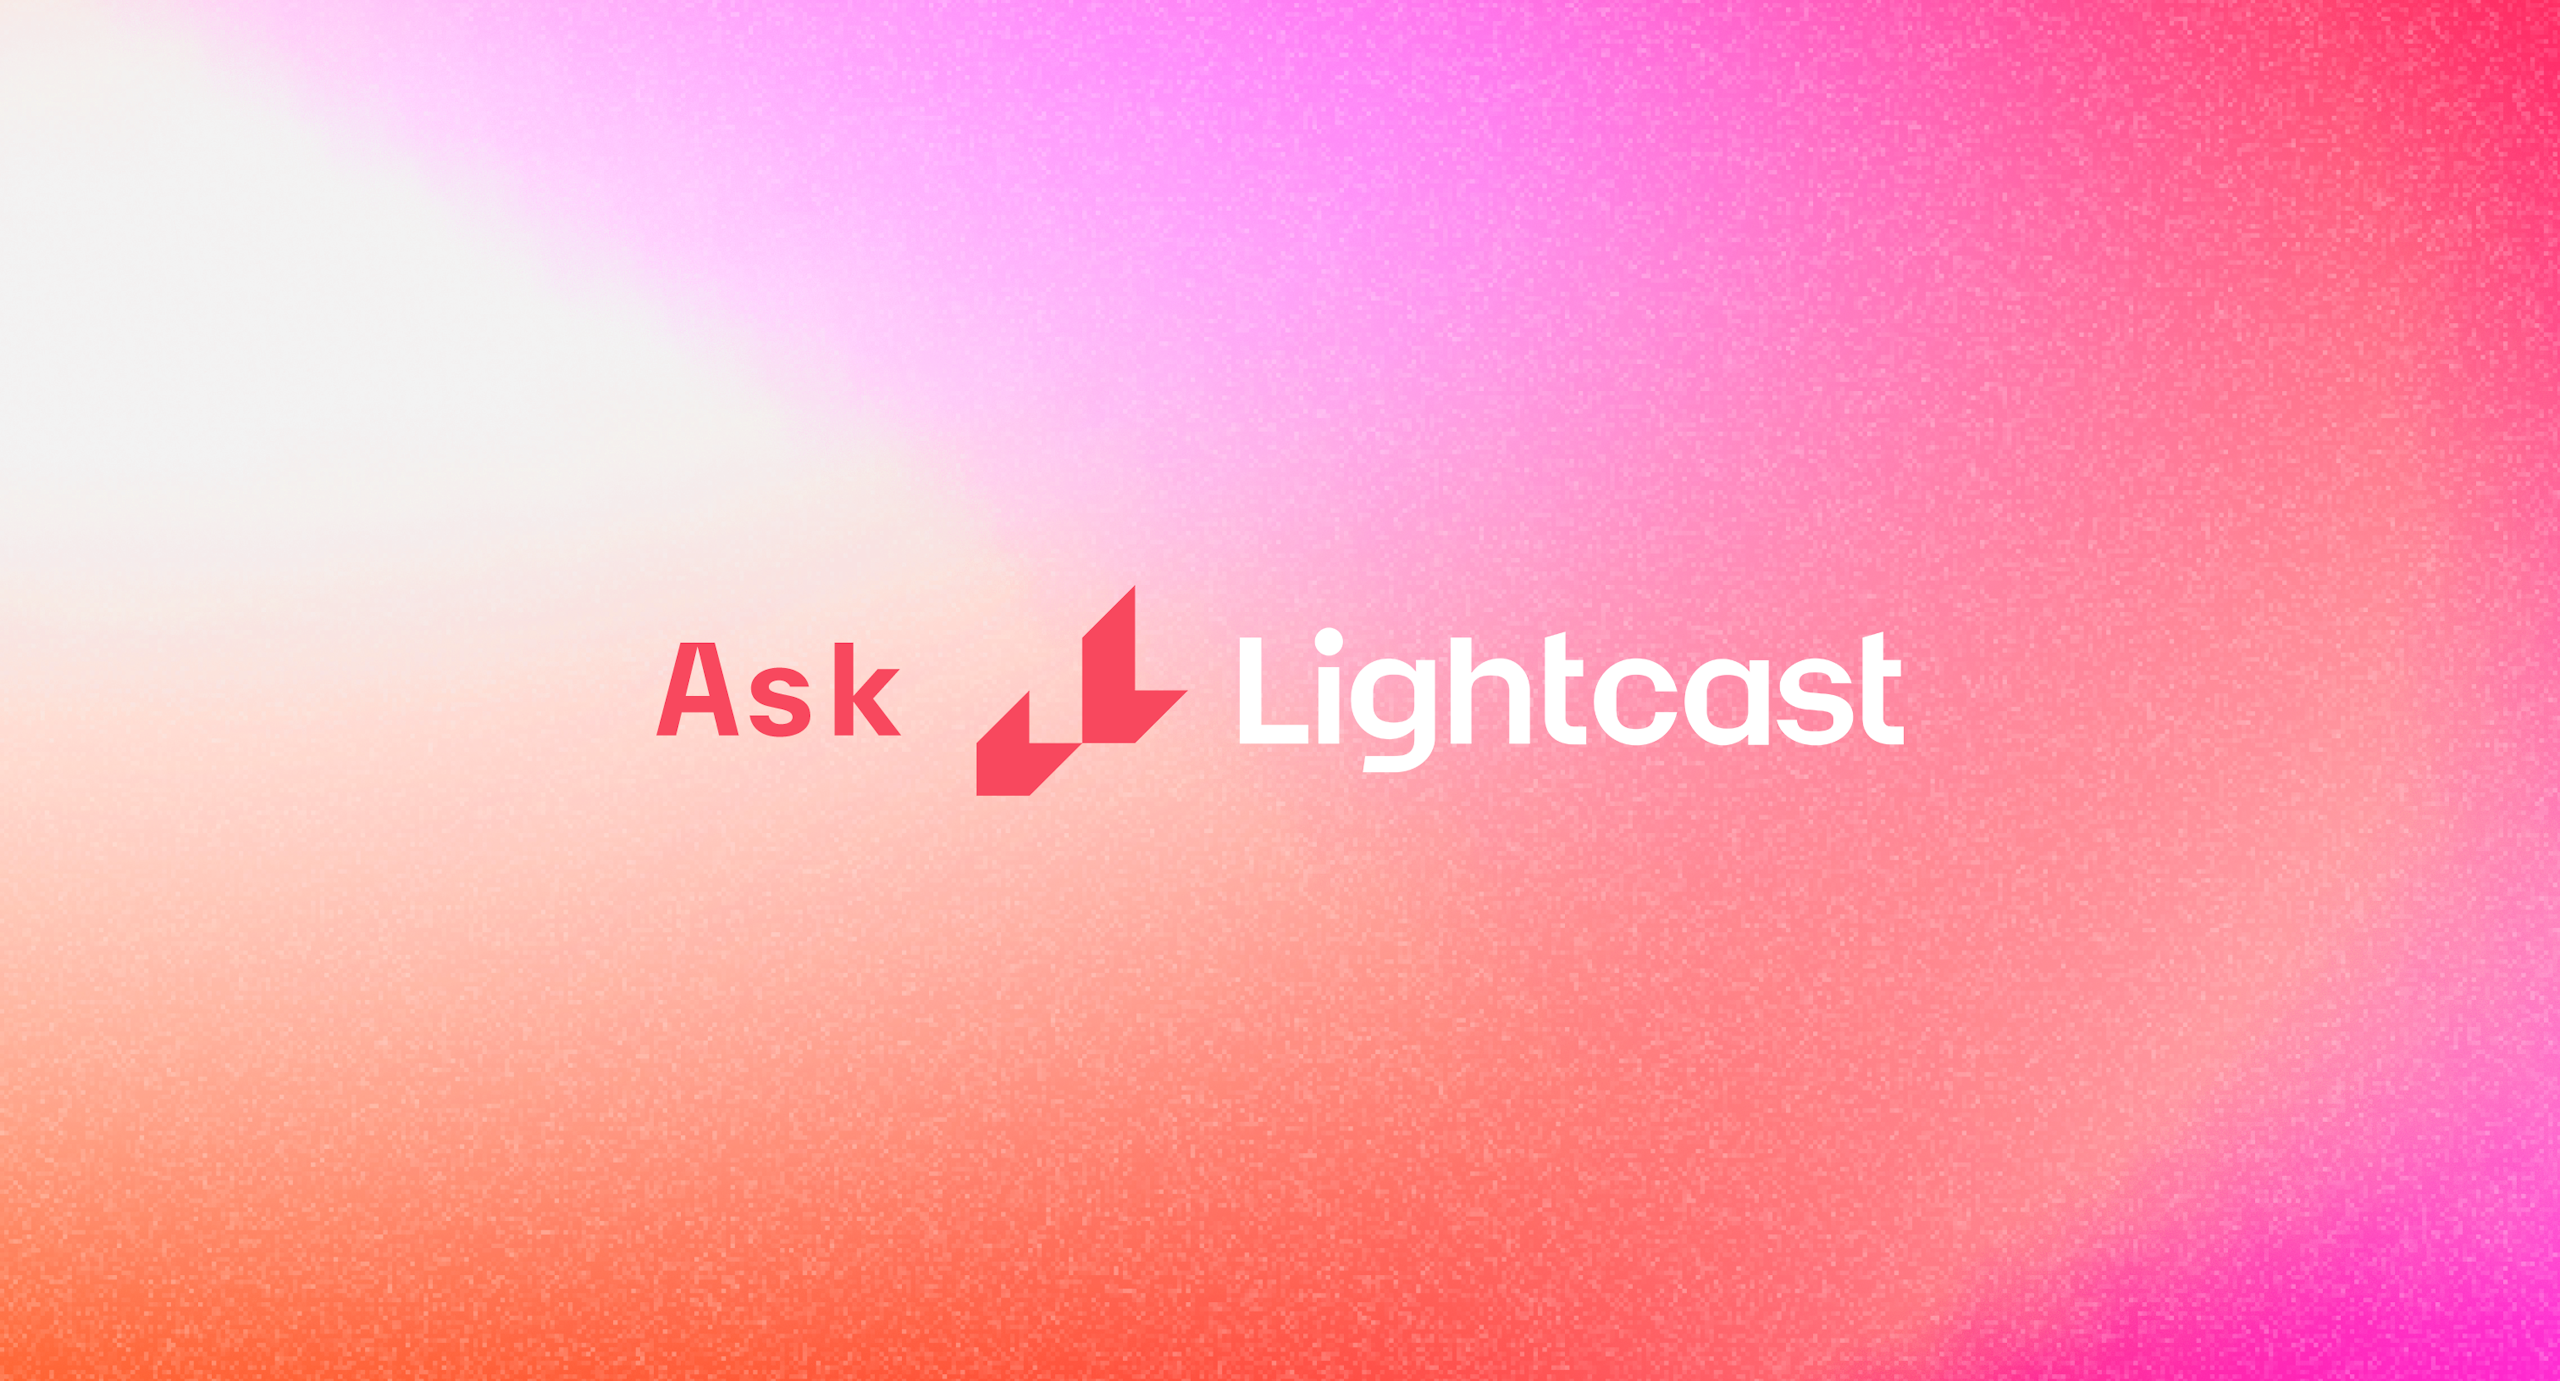 ask lightcast logo on glow background